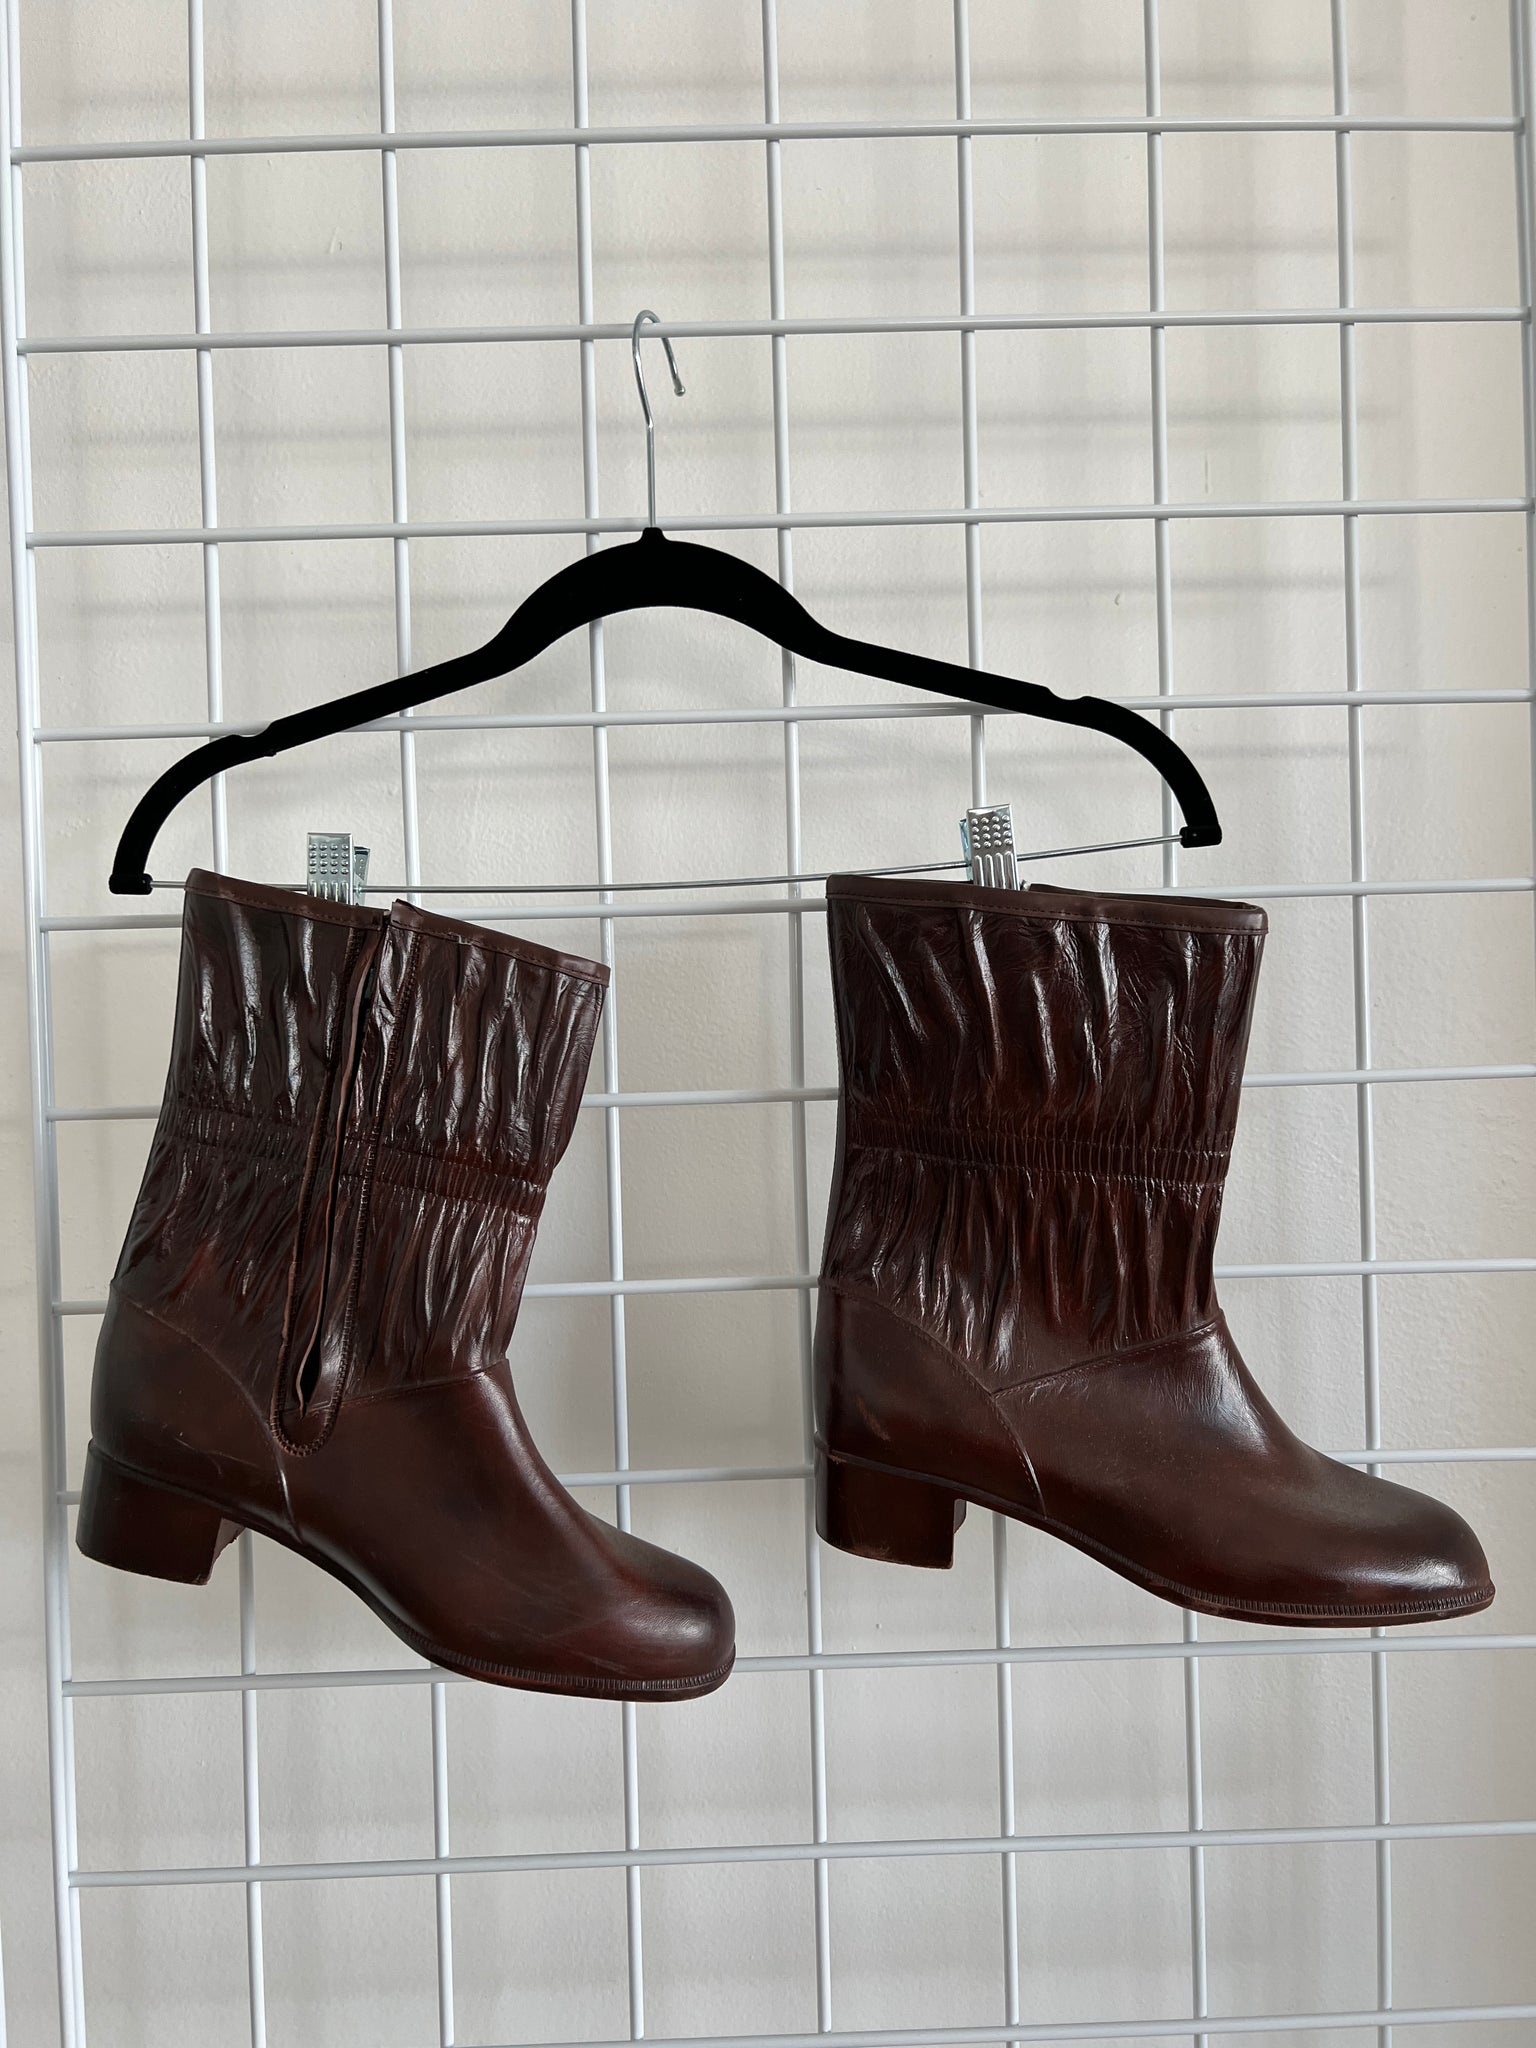 1980s SHOES- BOOTS- brown fur lined vinyl rainboots